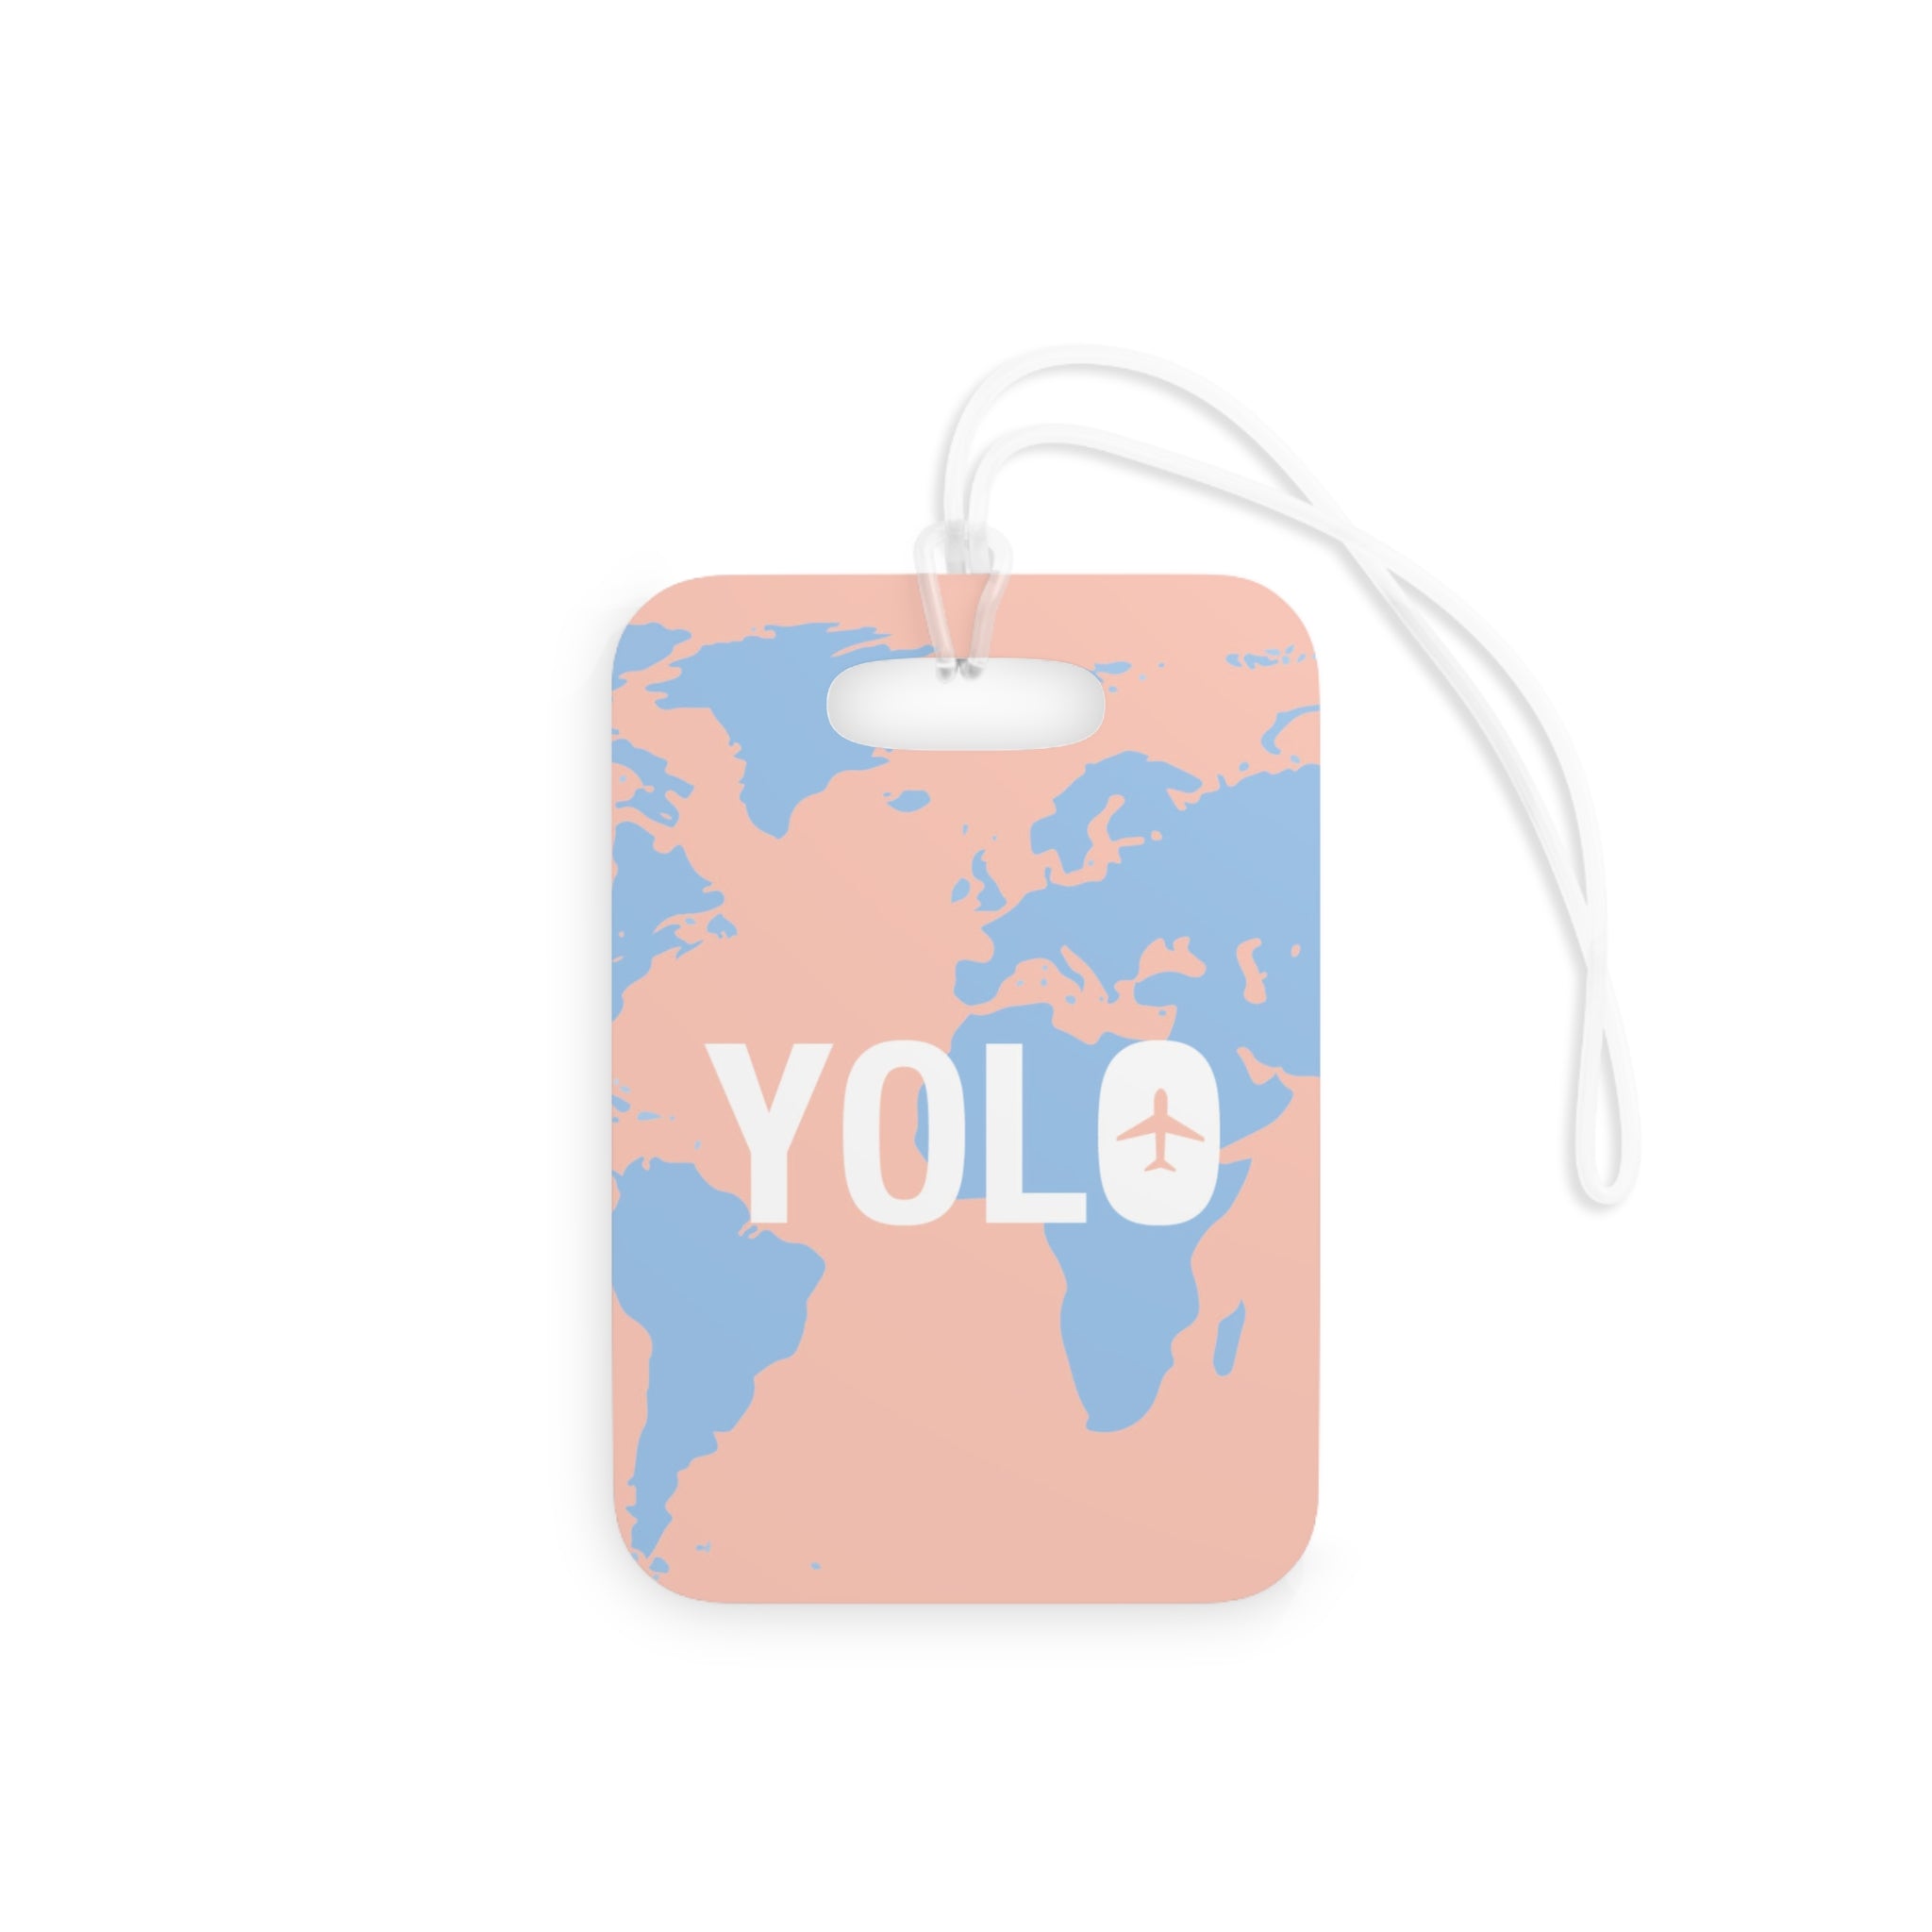 Yolo Luggage Tag (Pink)